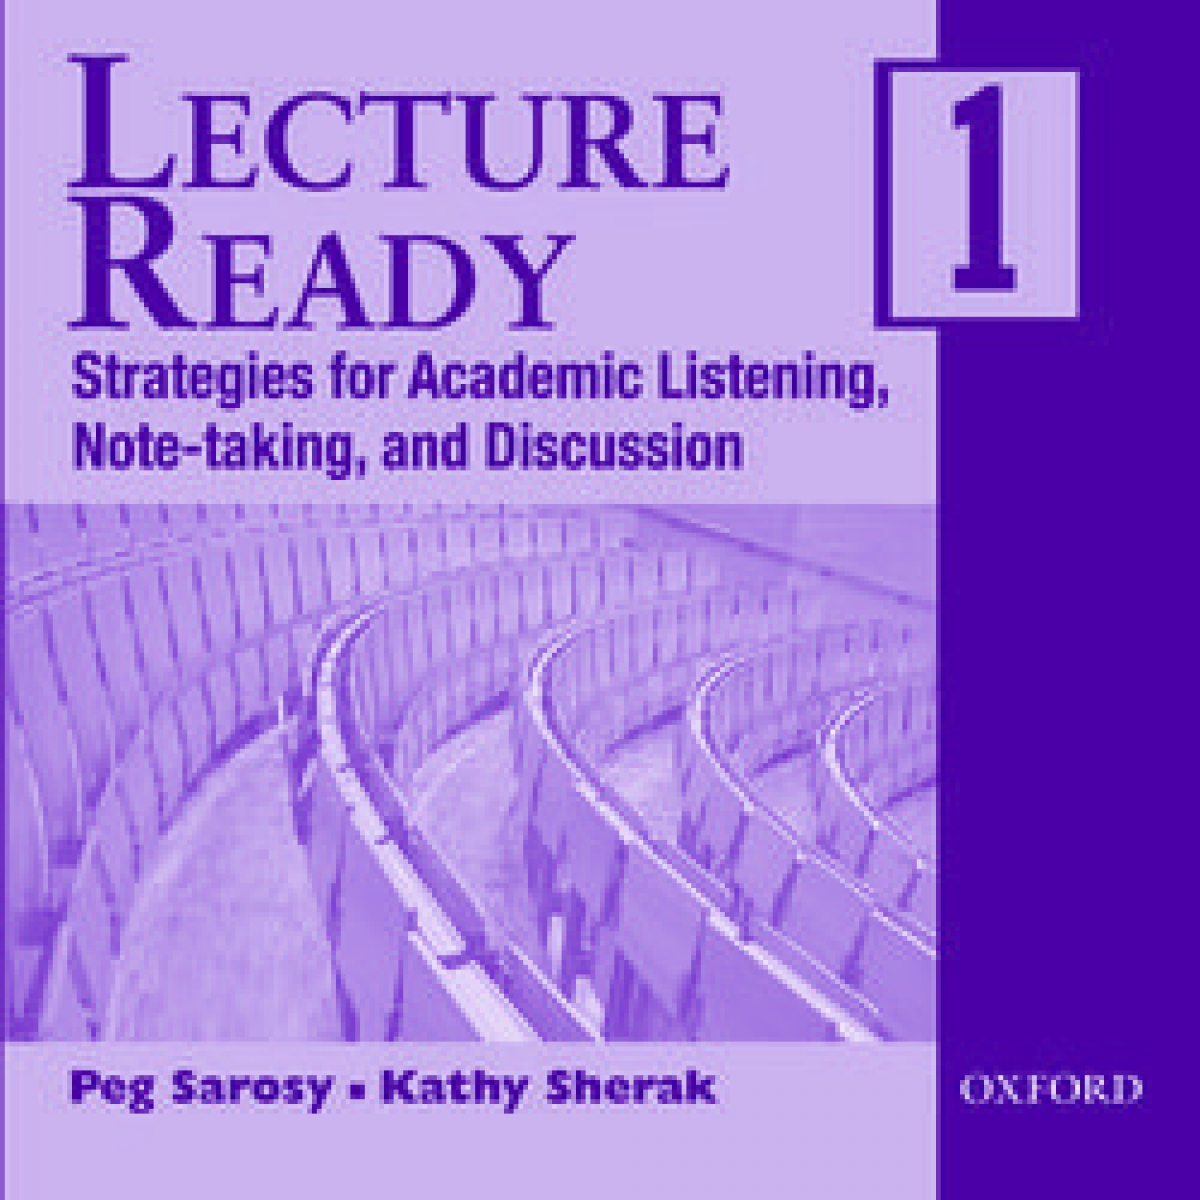 Peg Sarosy and Kathy Sherak Lecture Ready 1 Audio CDs (2) 